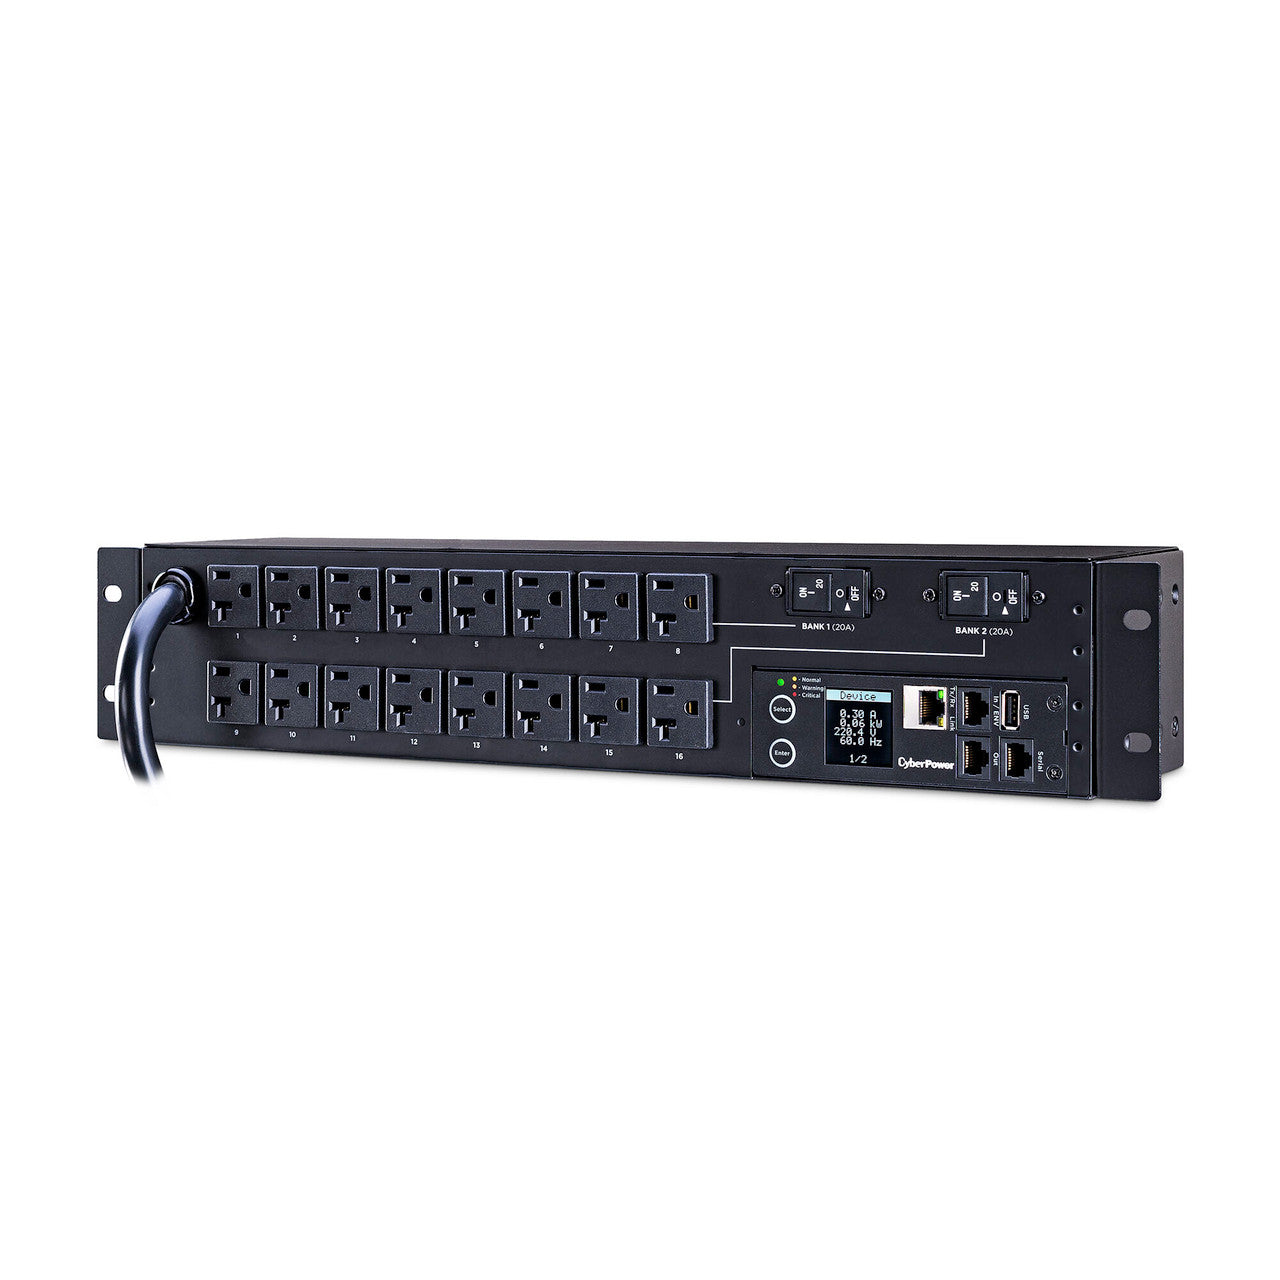 CyberPower PDU31003 Monitored PDU 30A 120V (16) 5-20R Outlets NEMA L5-30P 12ft Cord SNMP 1U 3YR WTY